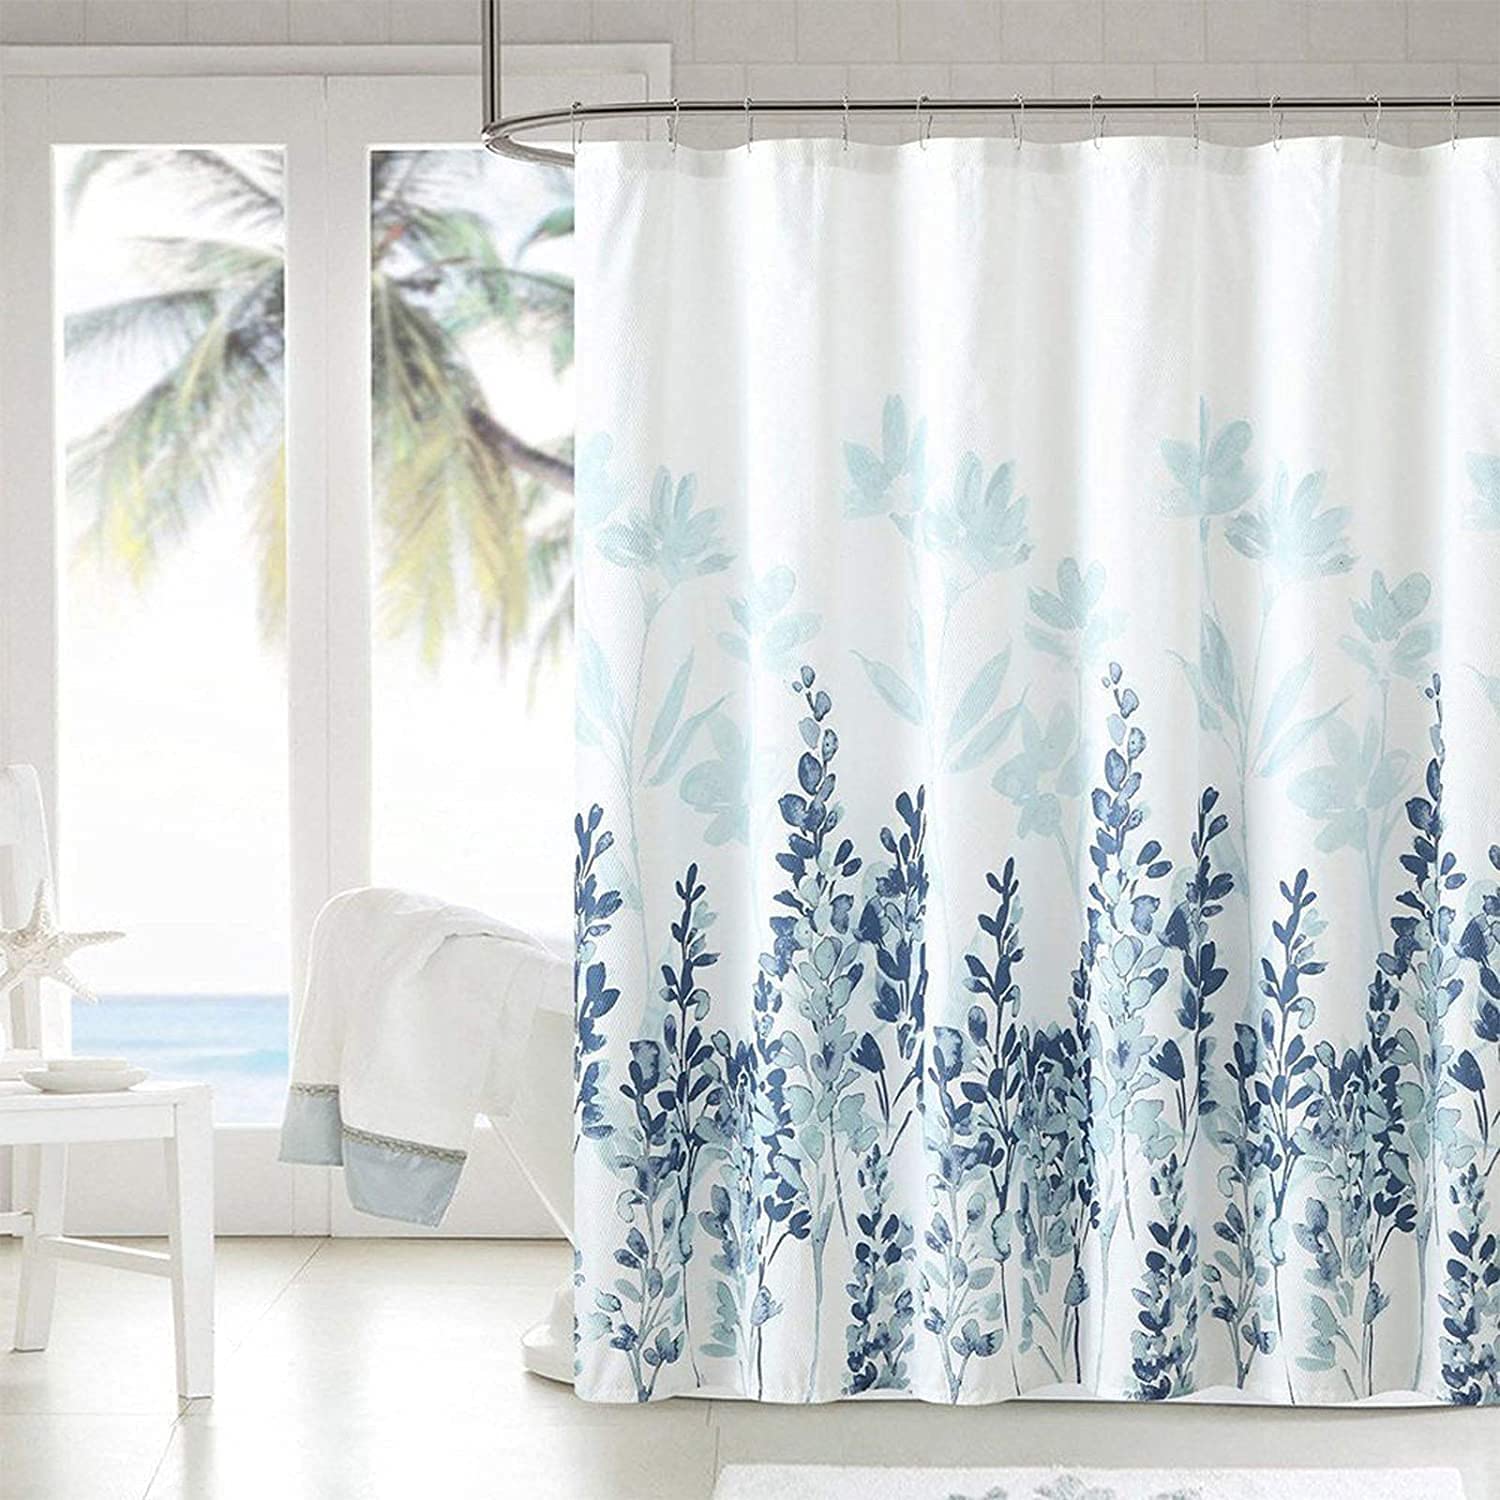 homewards Polyester Blue Floral Design Shower Curtain with 12 Hooks